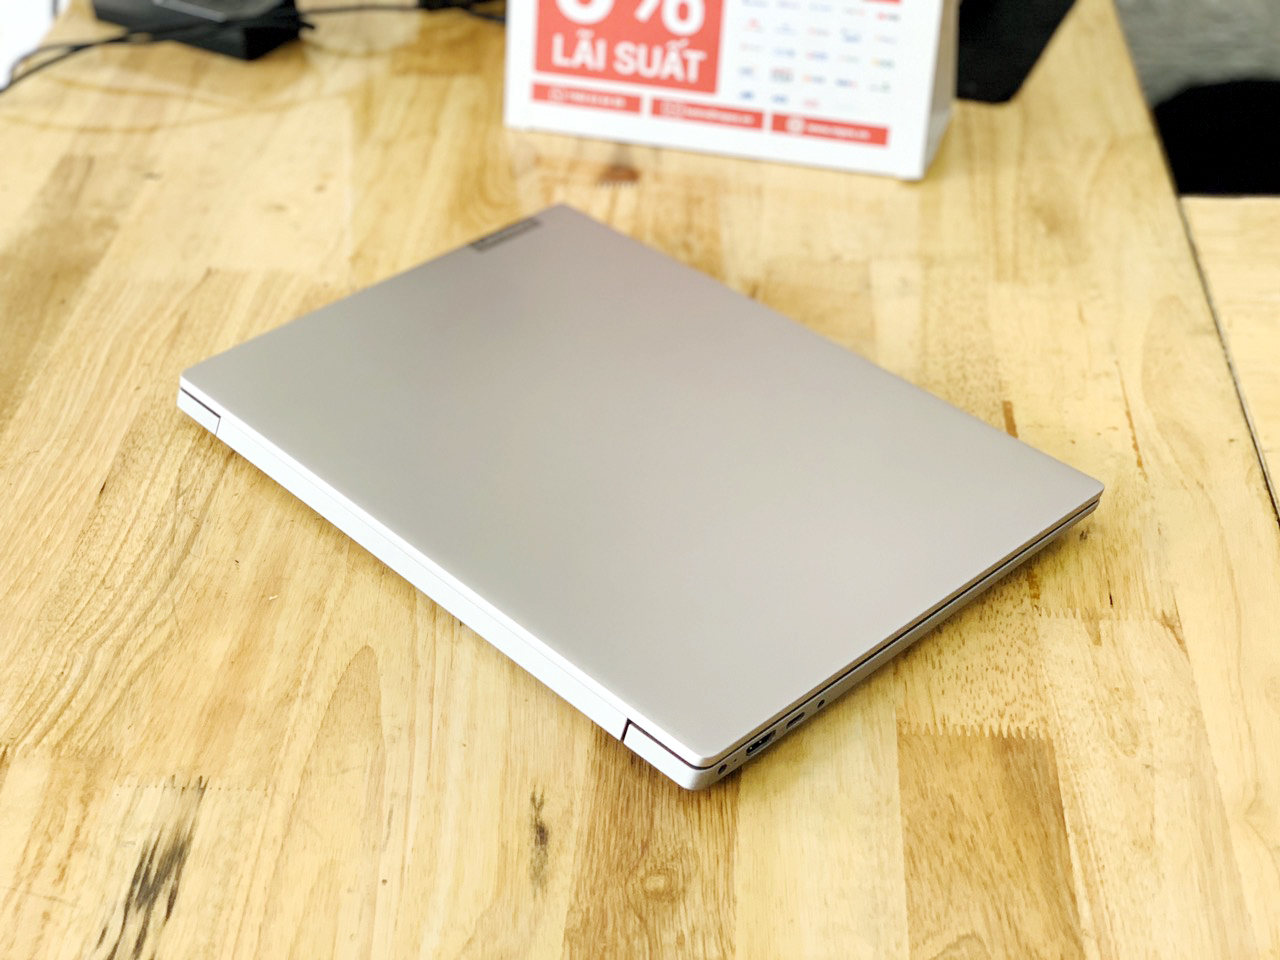 Lenovo IdeaPad S340 i3-1005G1 Ram 8GB SSD 512GB 15.6 inch Full HD Viền Mỏng Thế Hệ 10 (2019) Like New